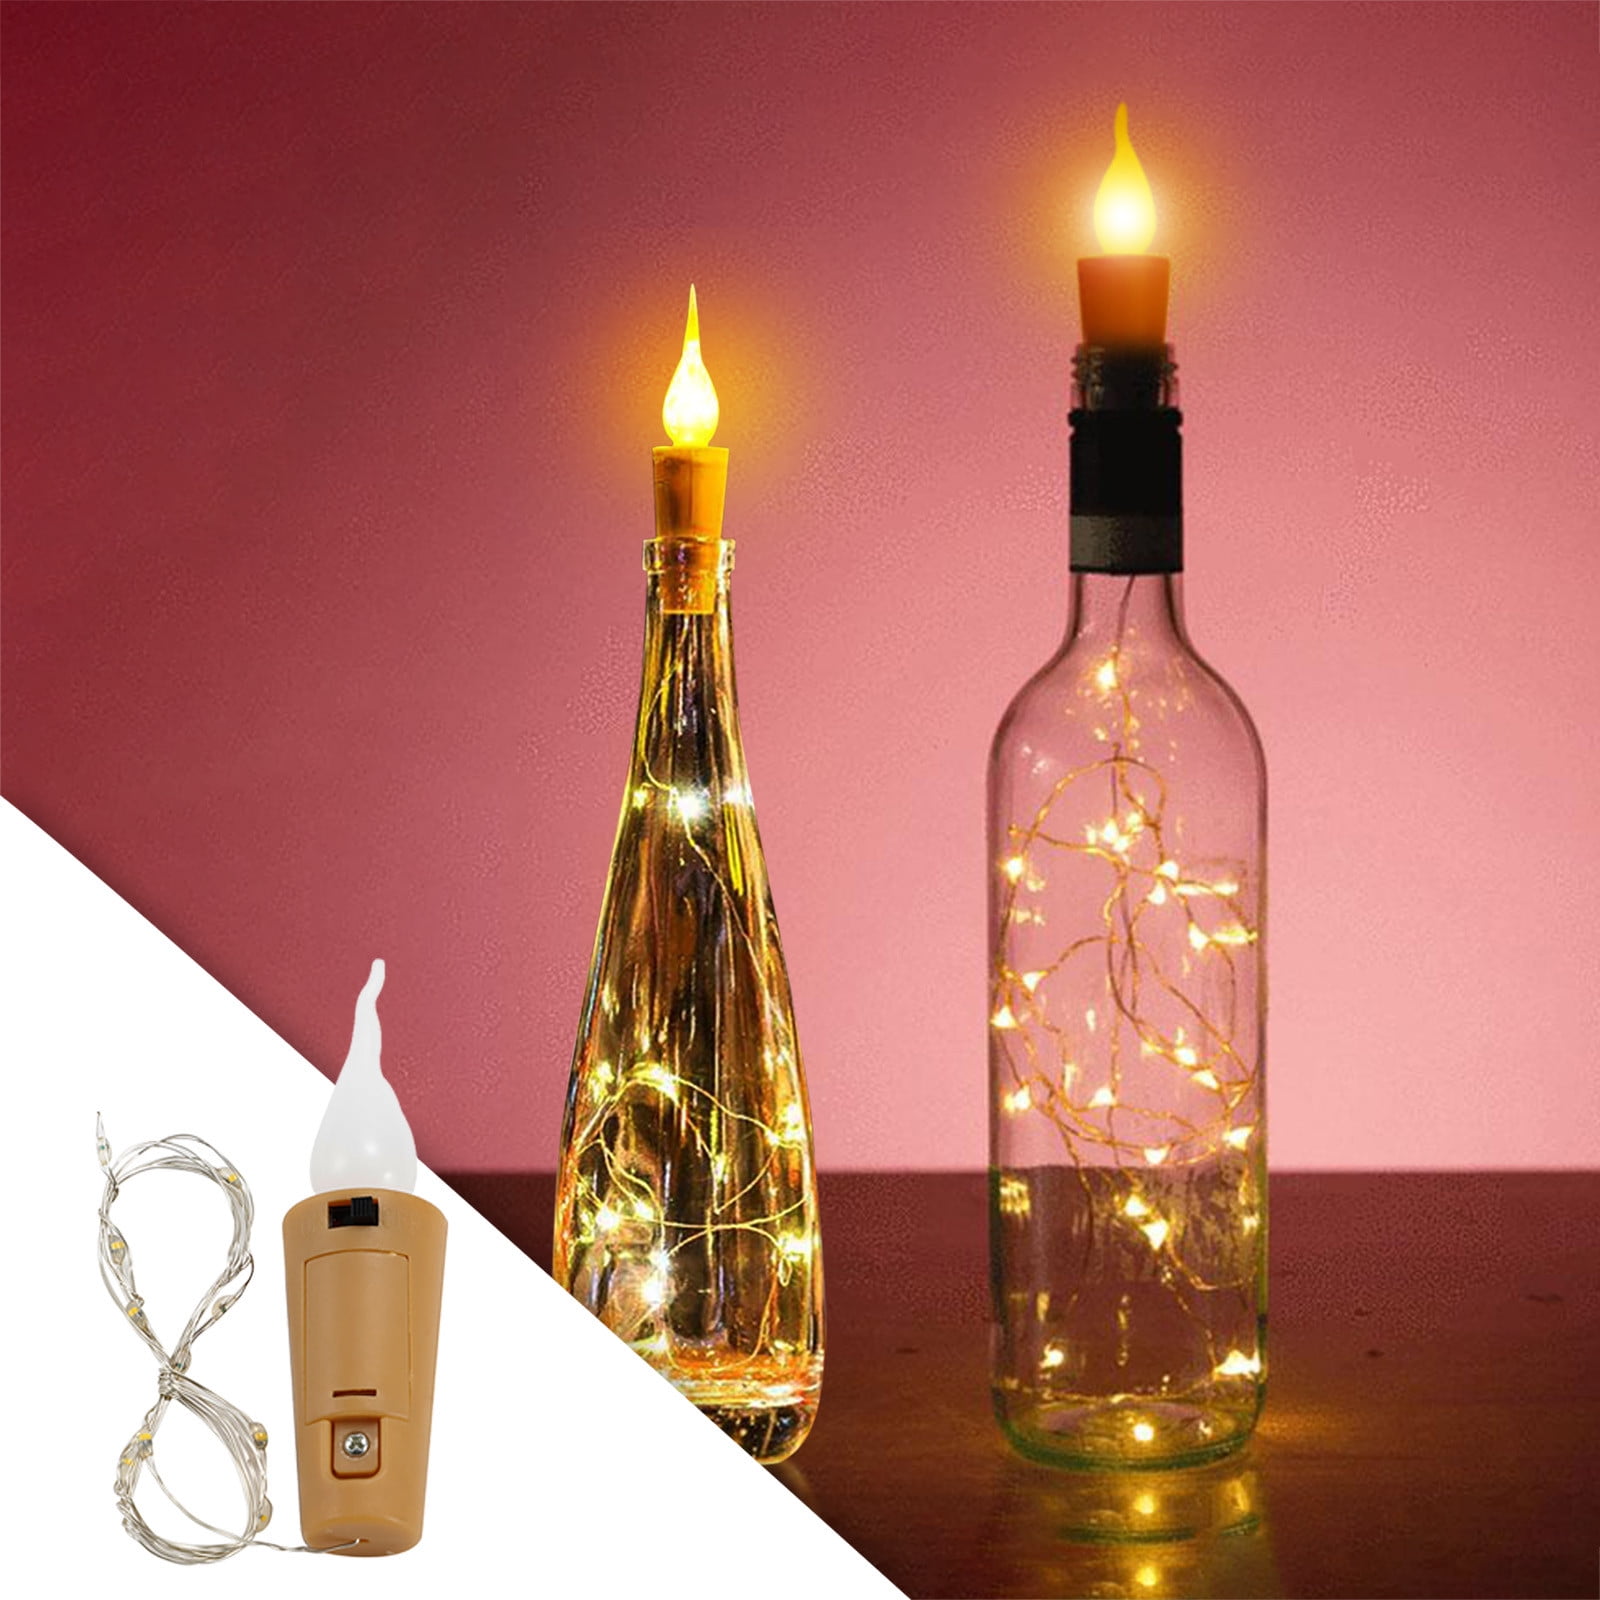 20 LED Fairy String Bottle Lights Battery Cork Shaped Christmas Wedding Party UK 